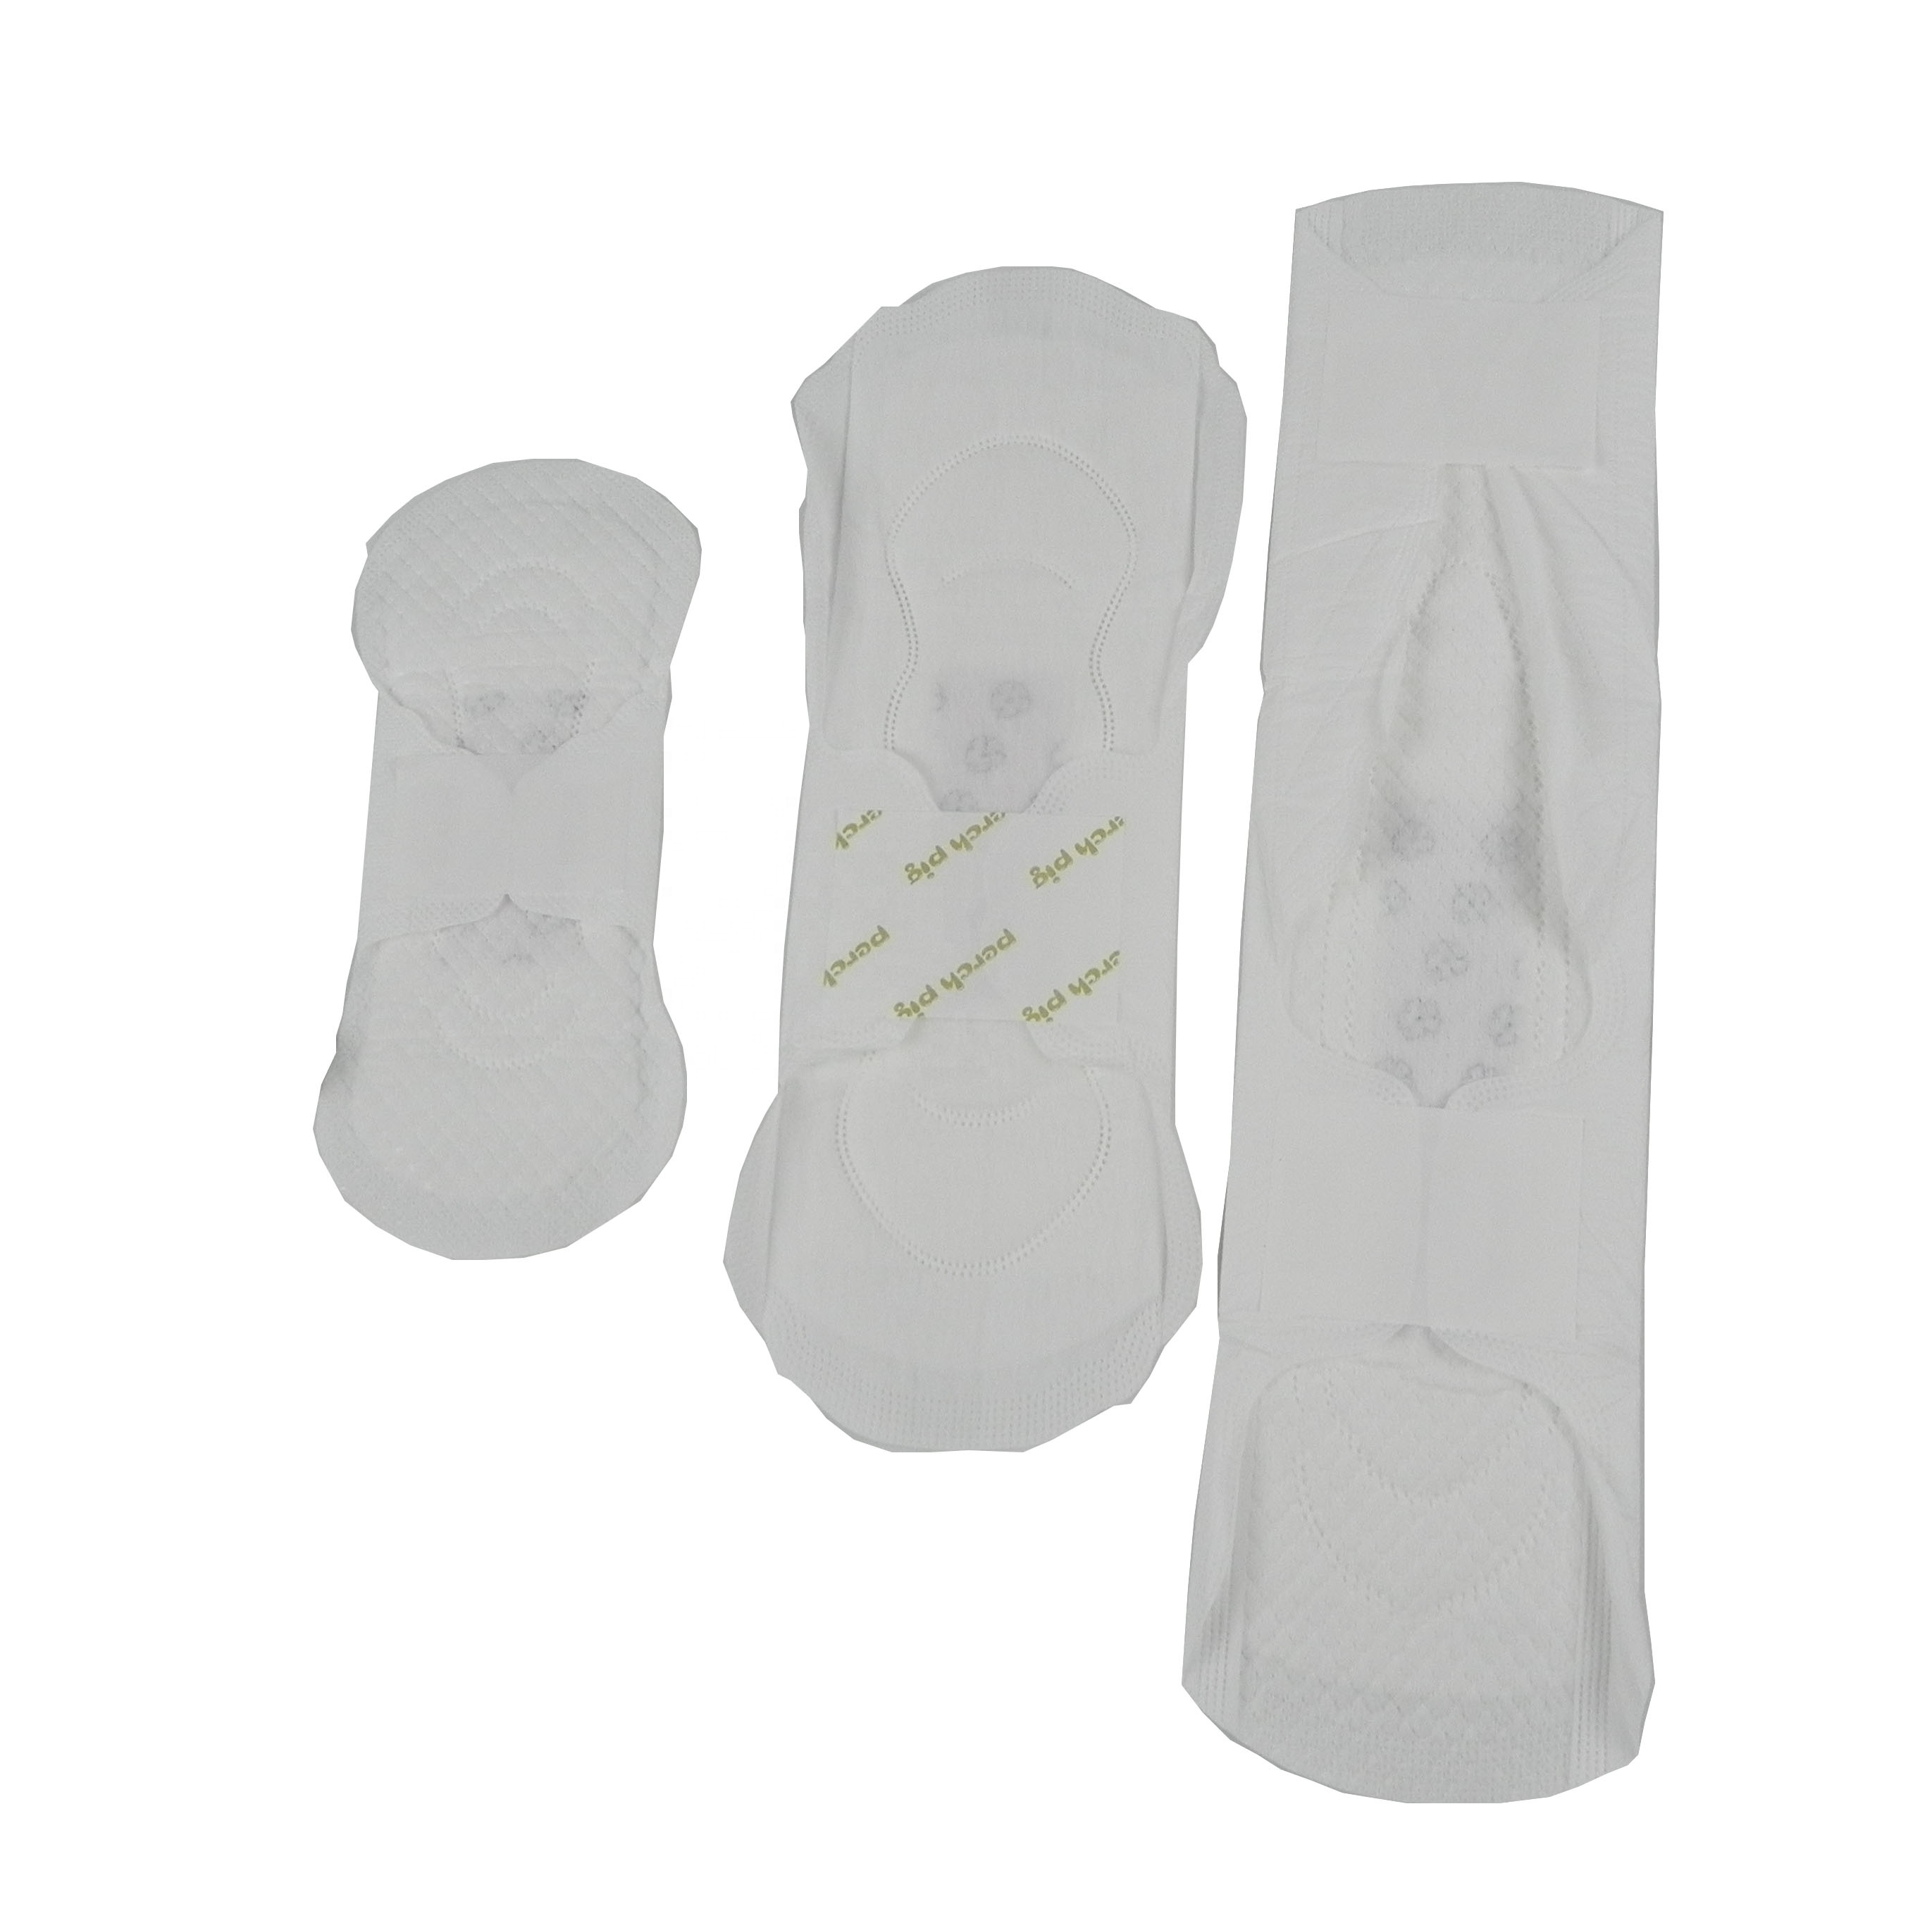 Good Quality Disposable Underwear Sanitary Napkins - free sample Cotton comfort softness Lady Pad – Yoho